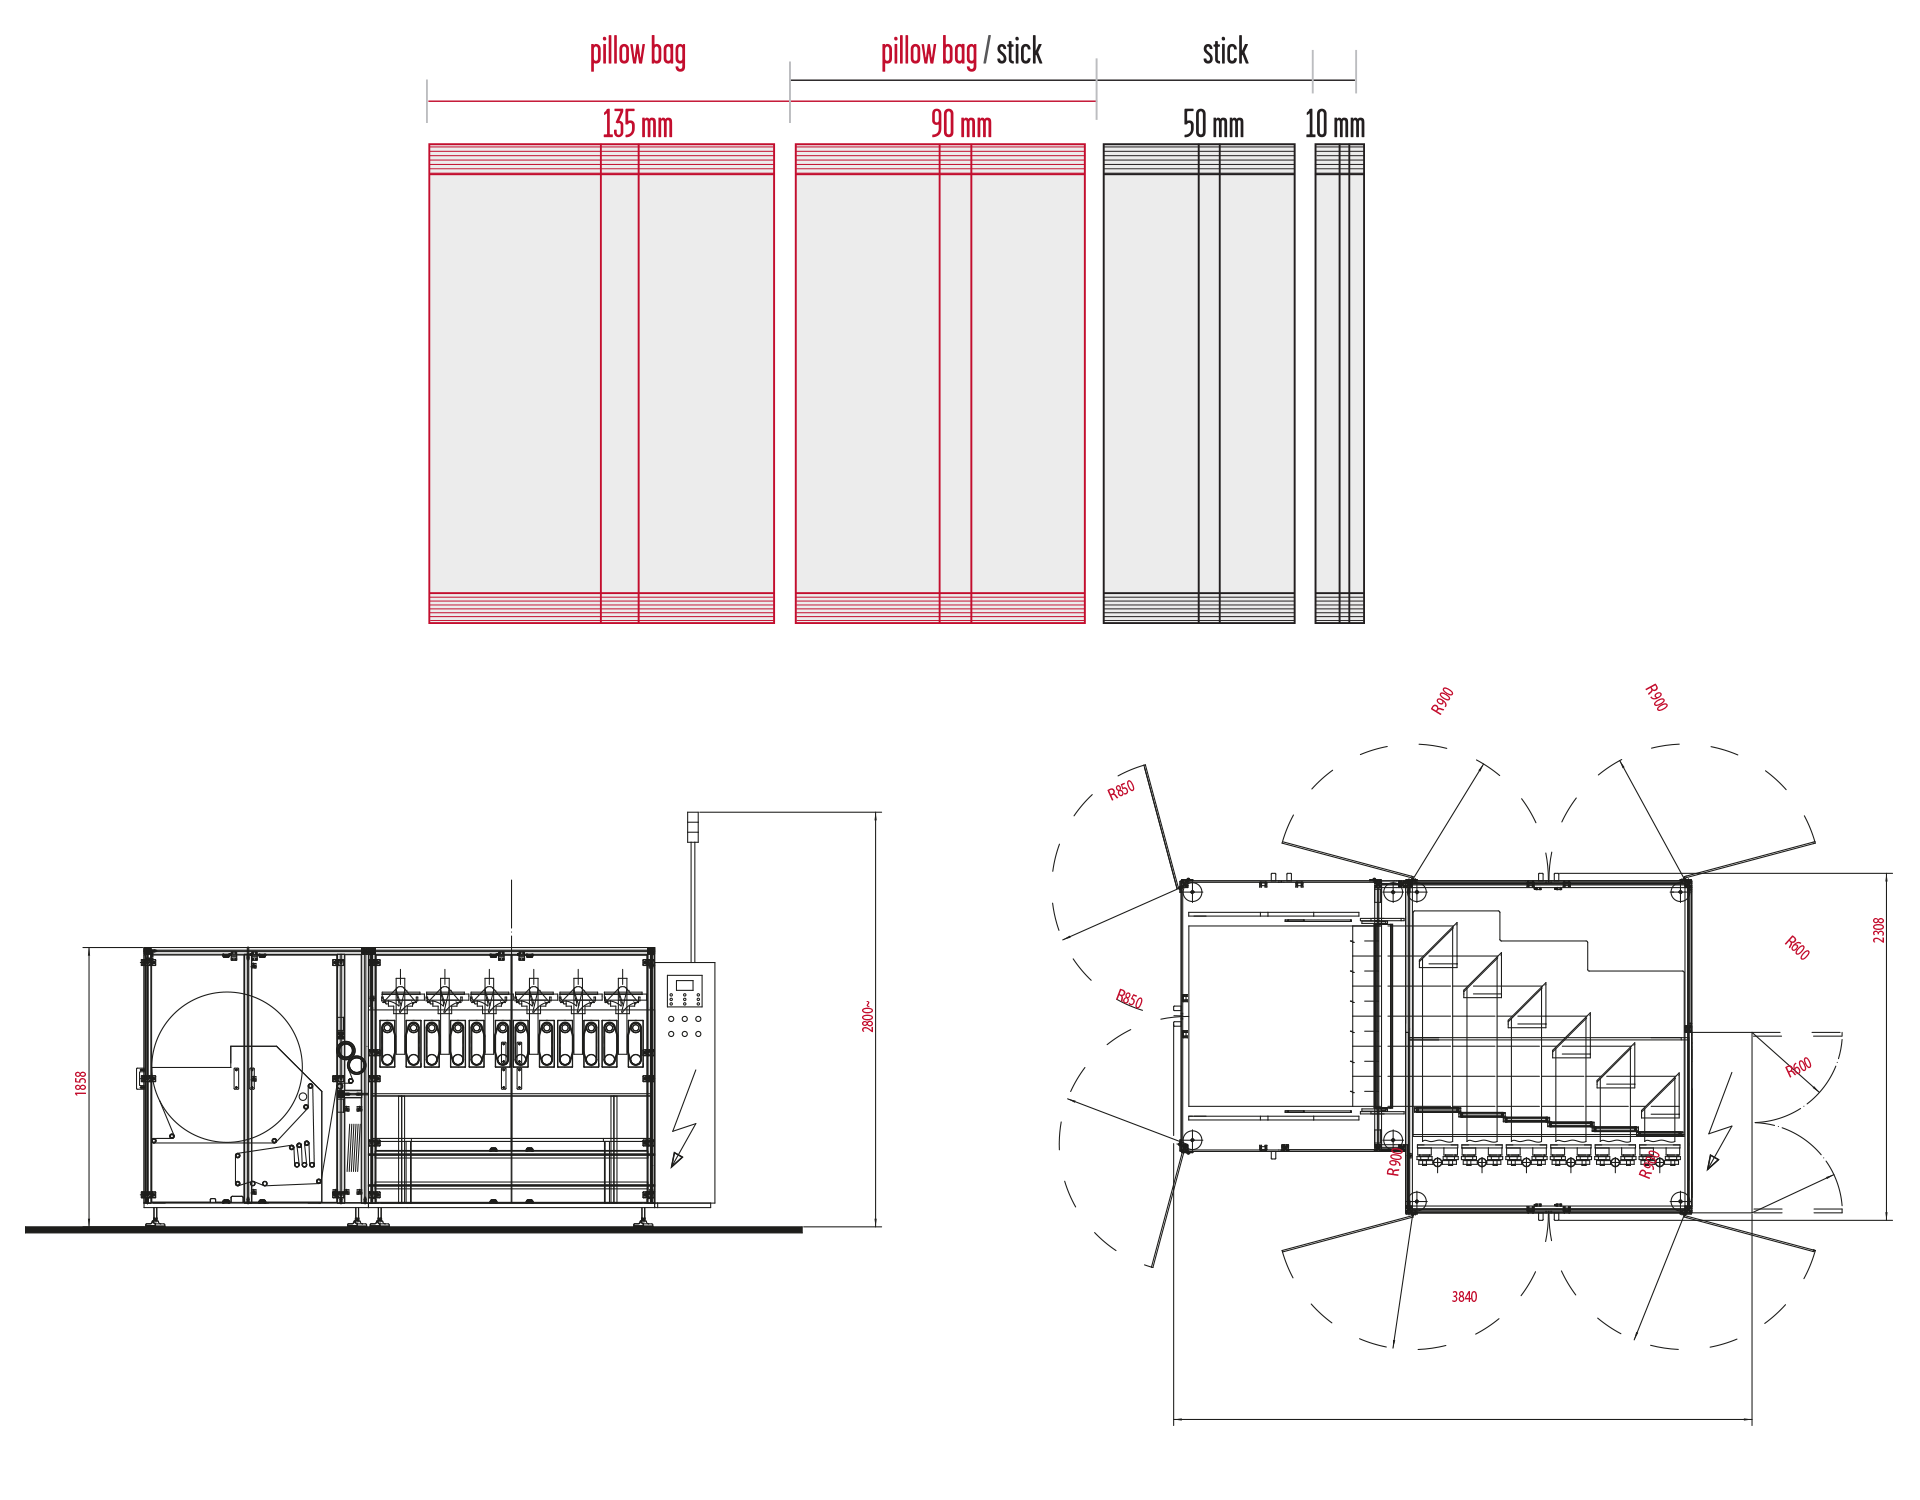 Flowpack sachet and machine layout